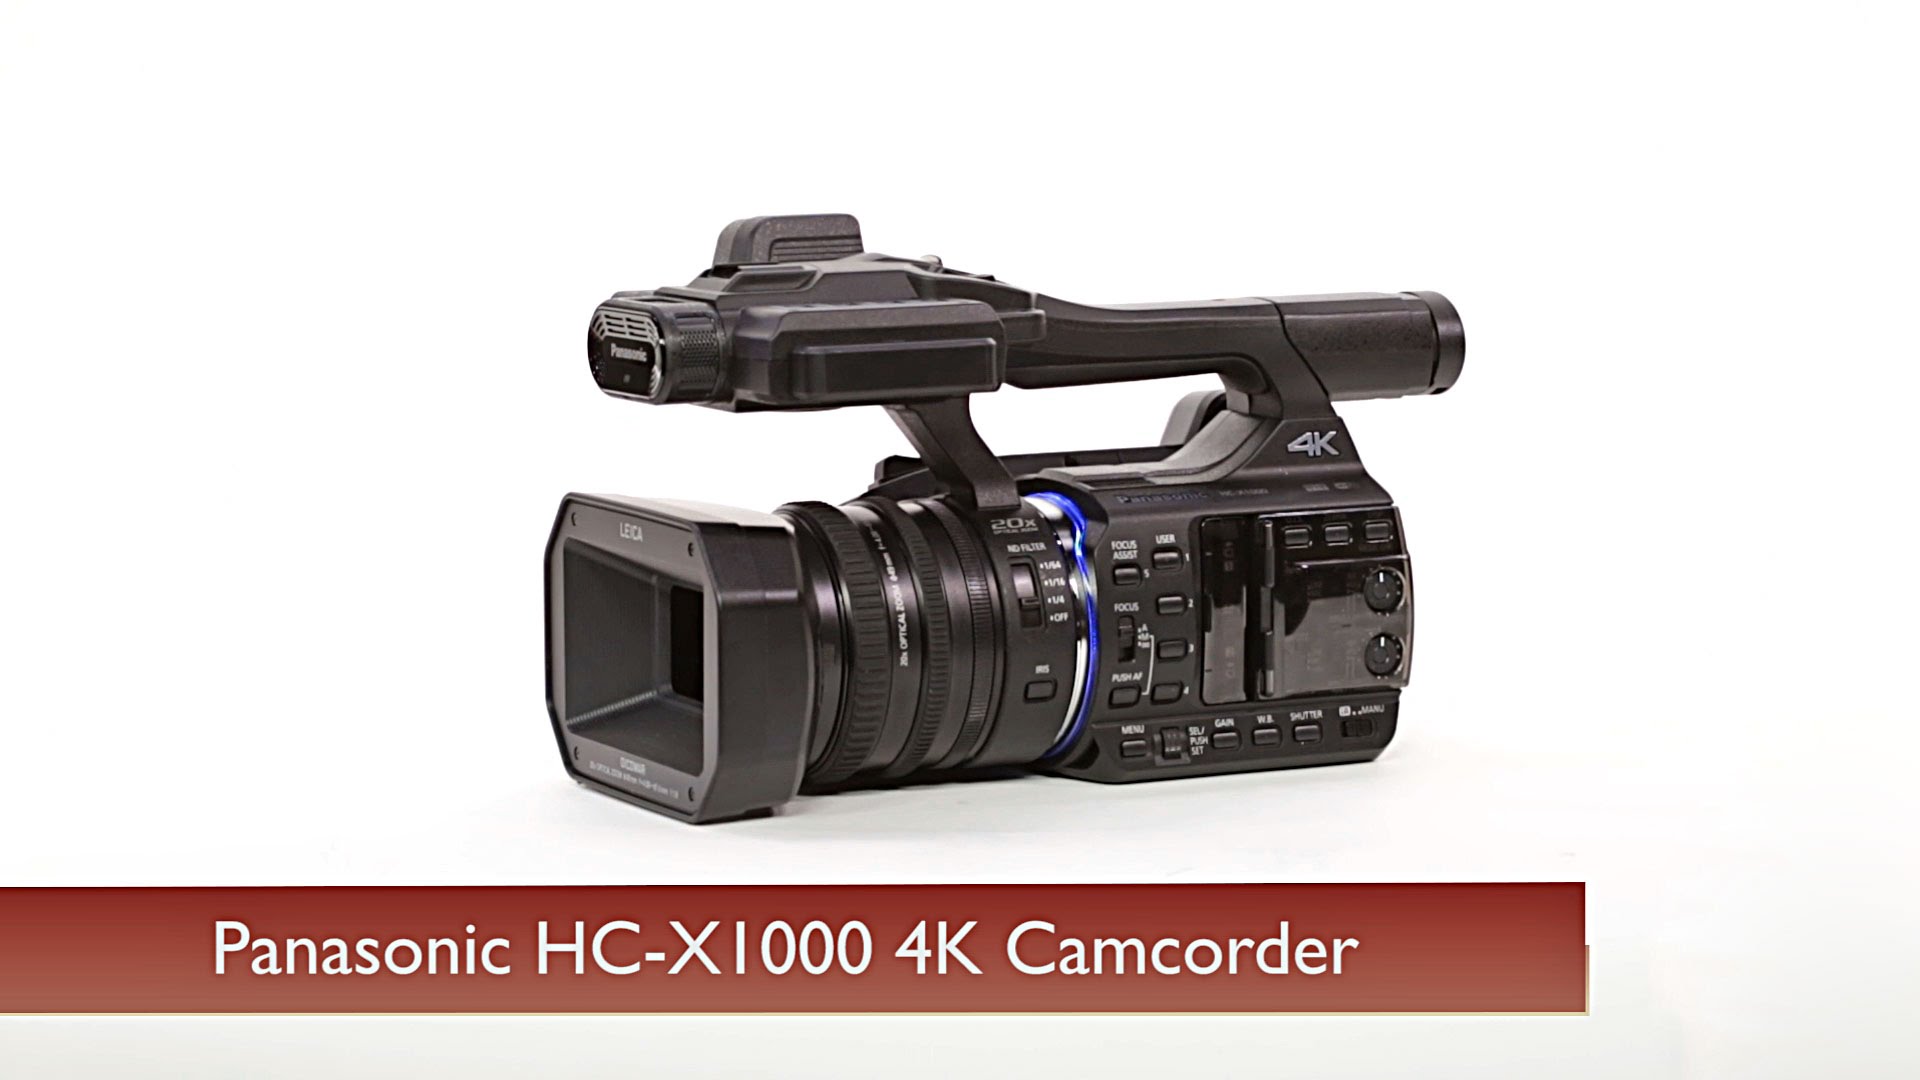 First Look: Panasonic HC-X1000 4K Camcorder